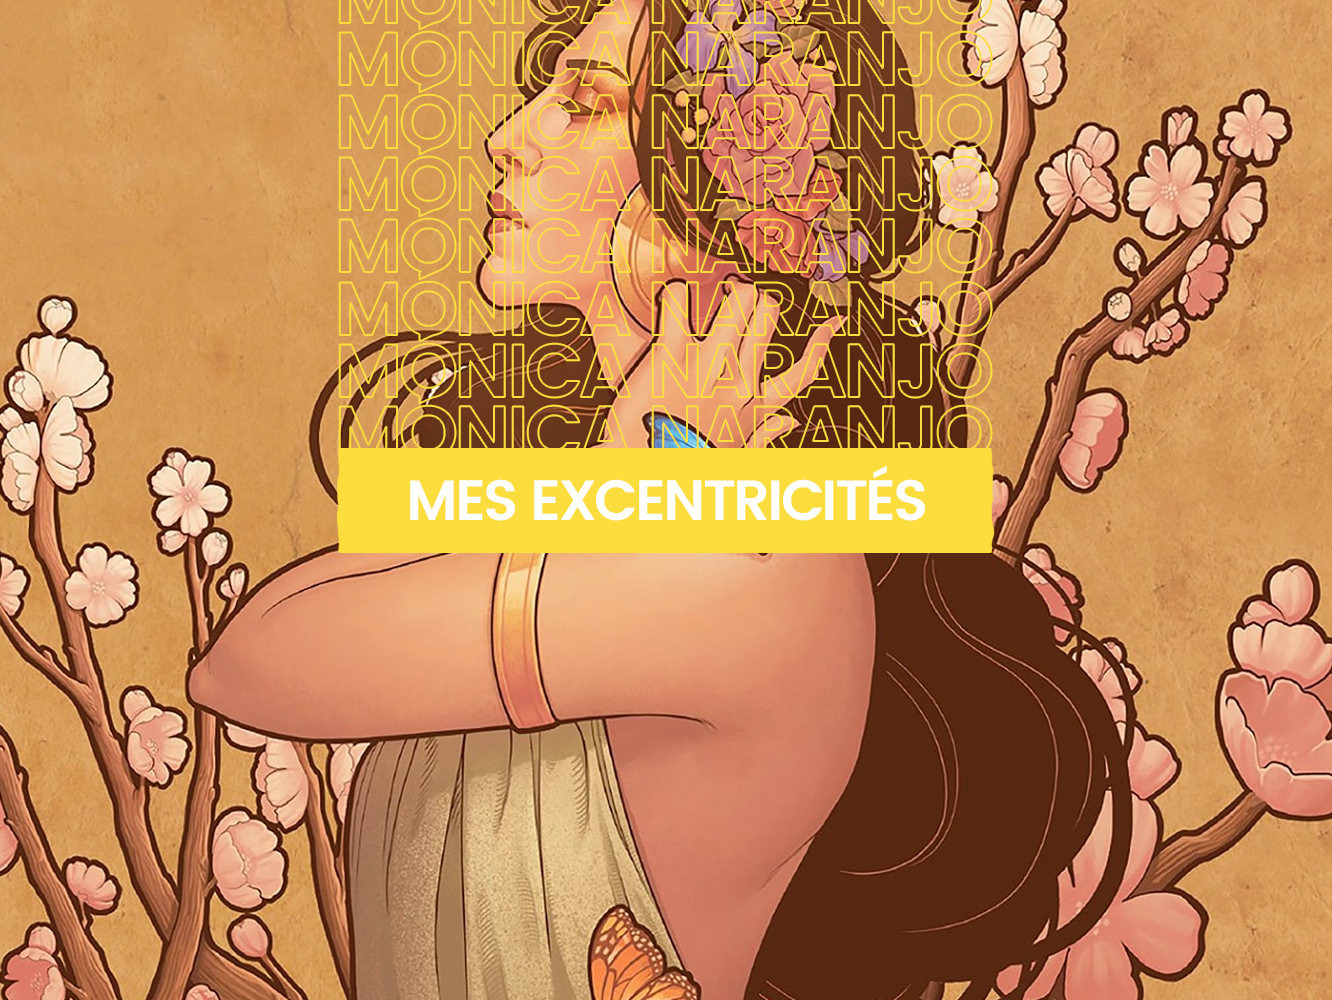  ‘Mes Excentricités Vol. 1 & 2’, Mónica Naranjo va a por todas, dispare a donde dispare